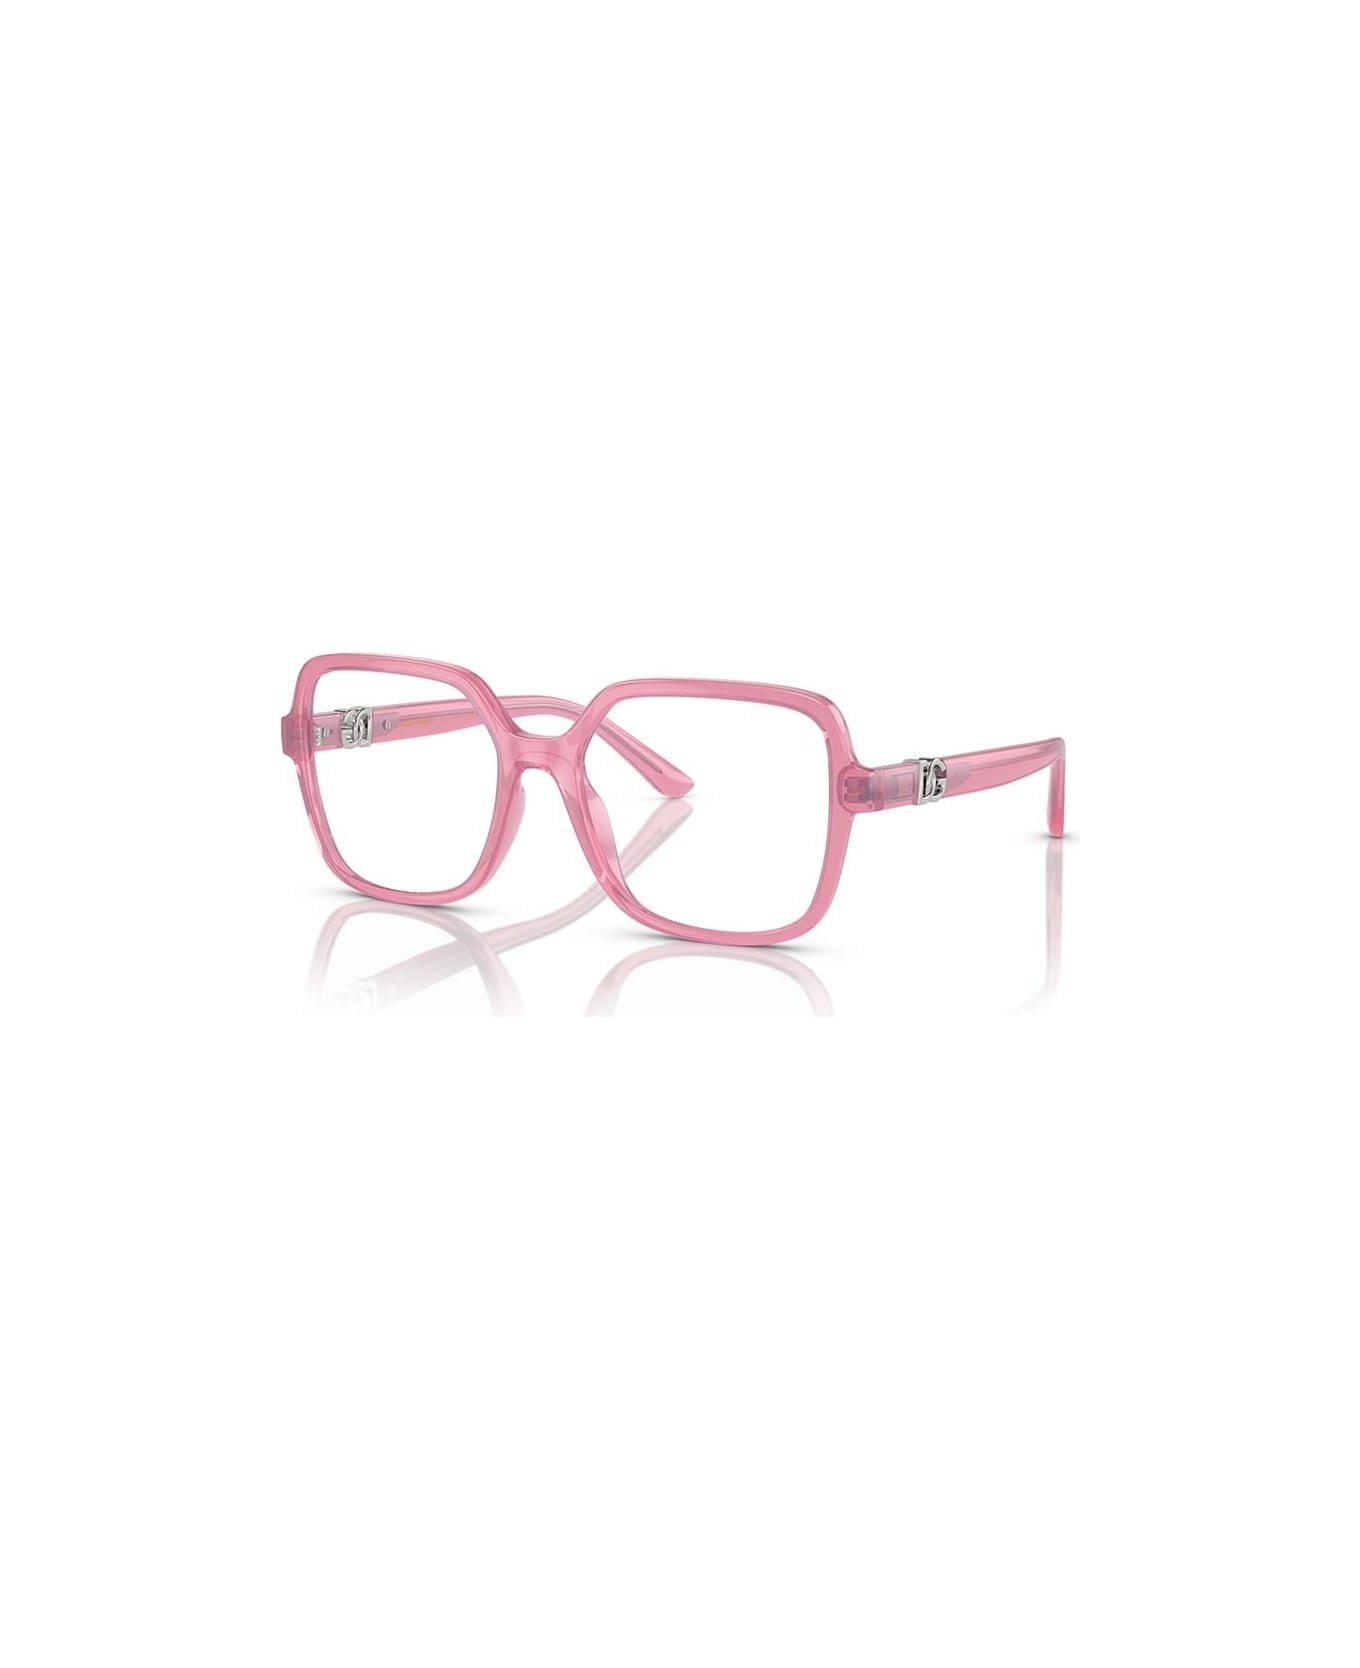 Dolce & Gabbana Eyewear Glasses - Rosa アイウェア